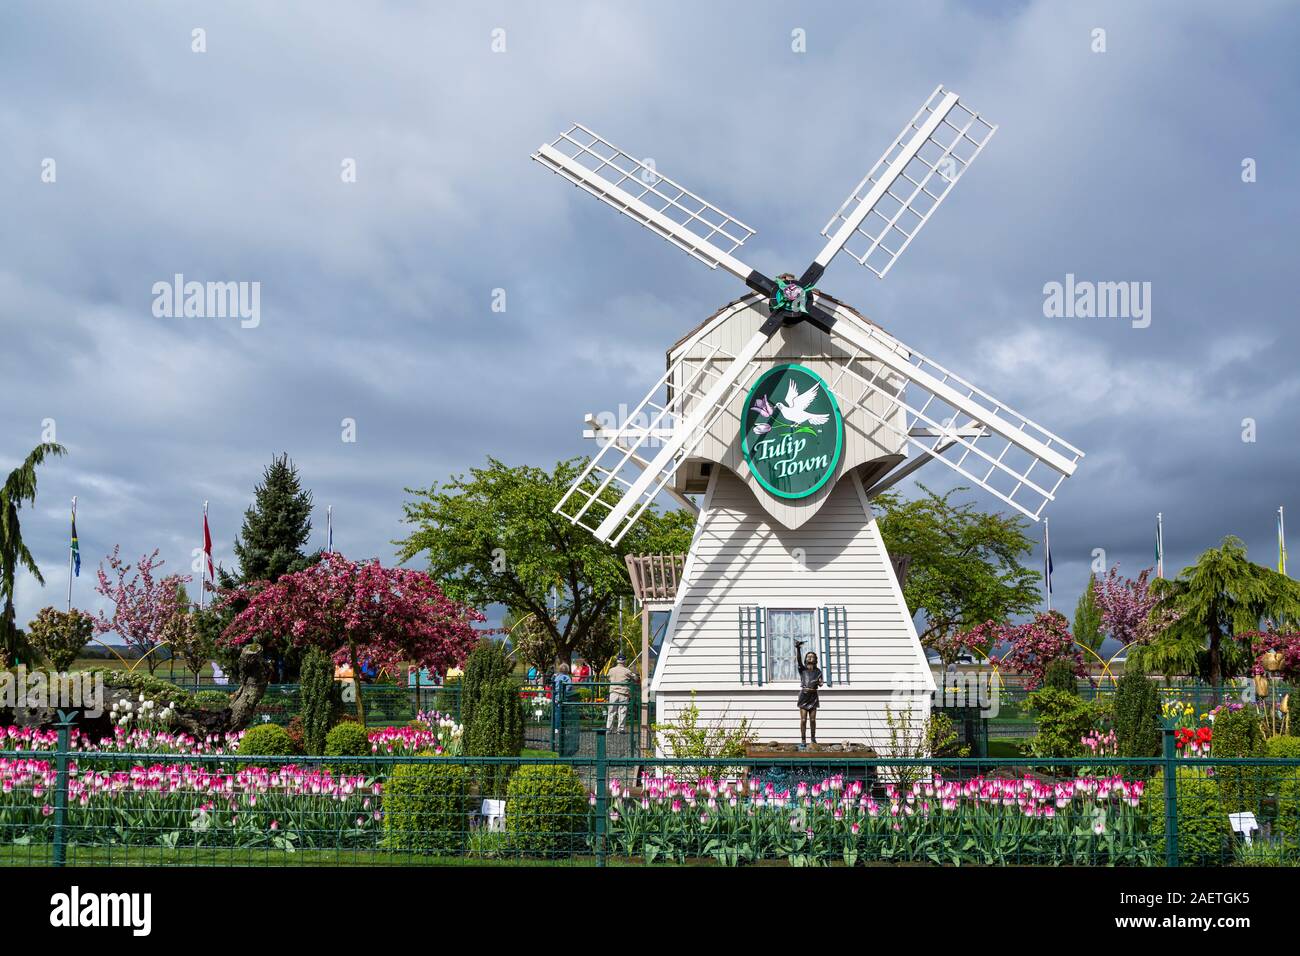 The windmill at Tulip Town in the Skagit Valley, Mount Vernon, Washington, USA. Stock Photo